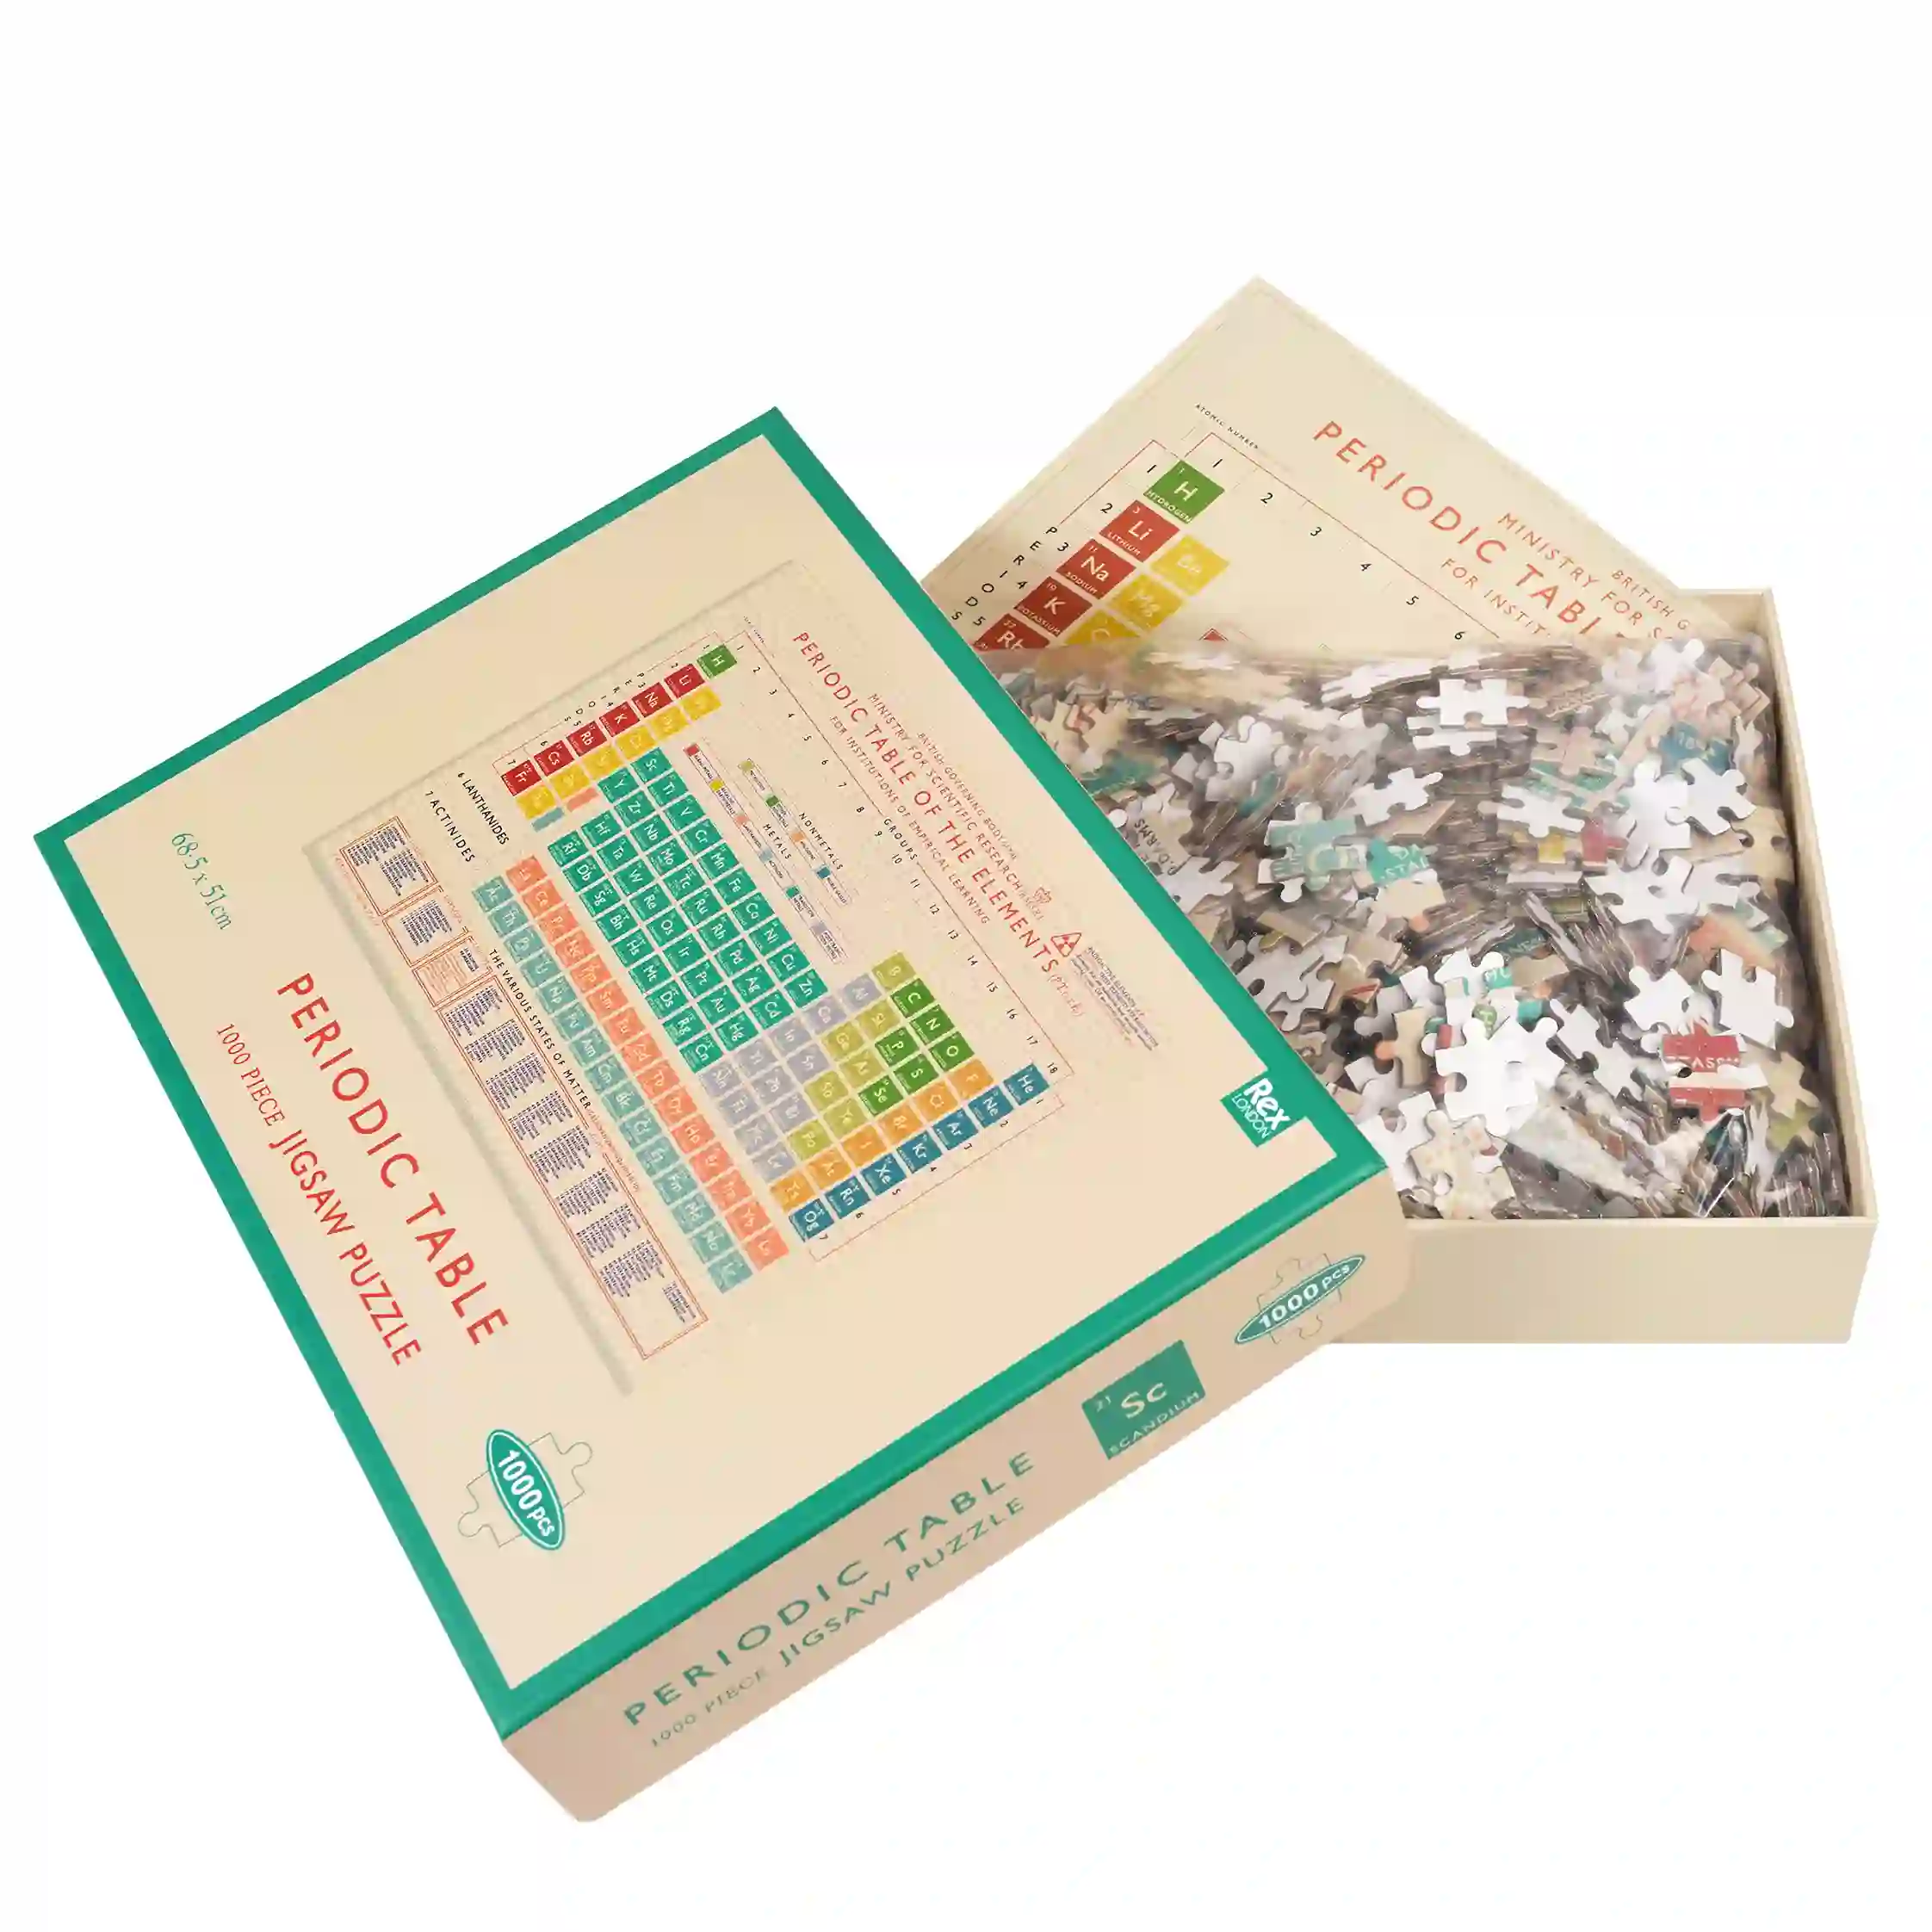 rompecabezas 1000 piezas periodic table